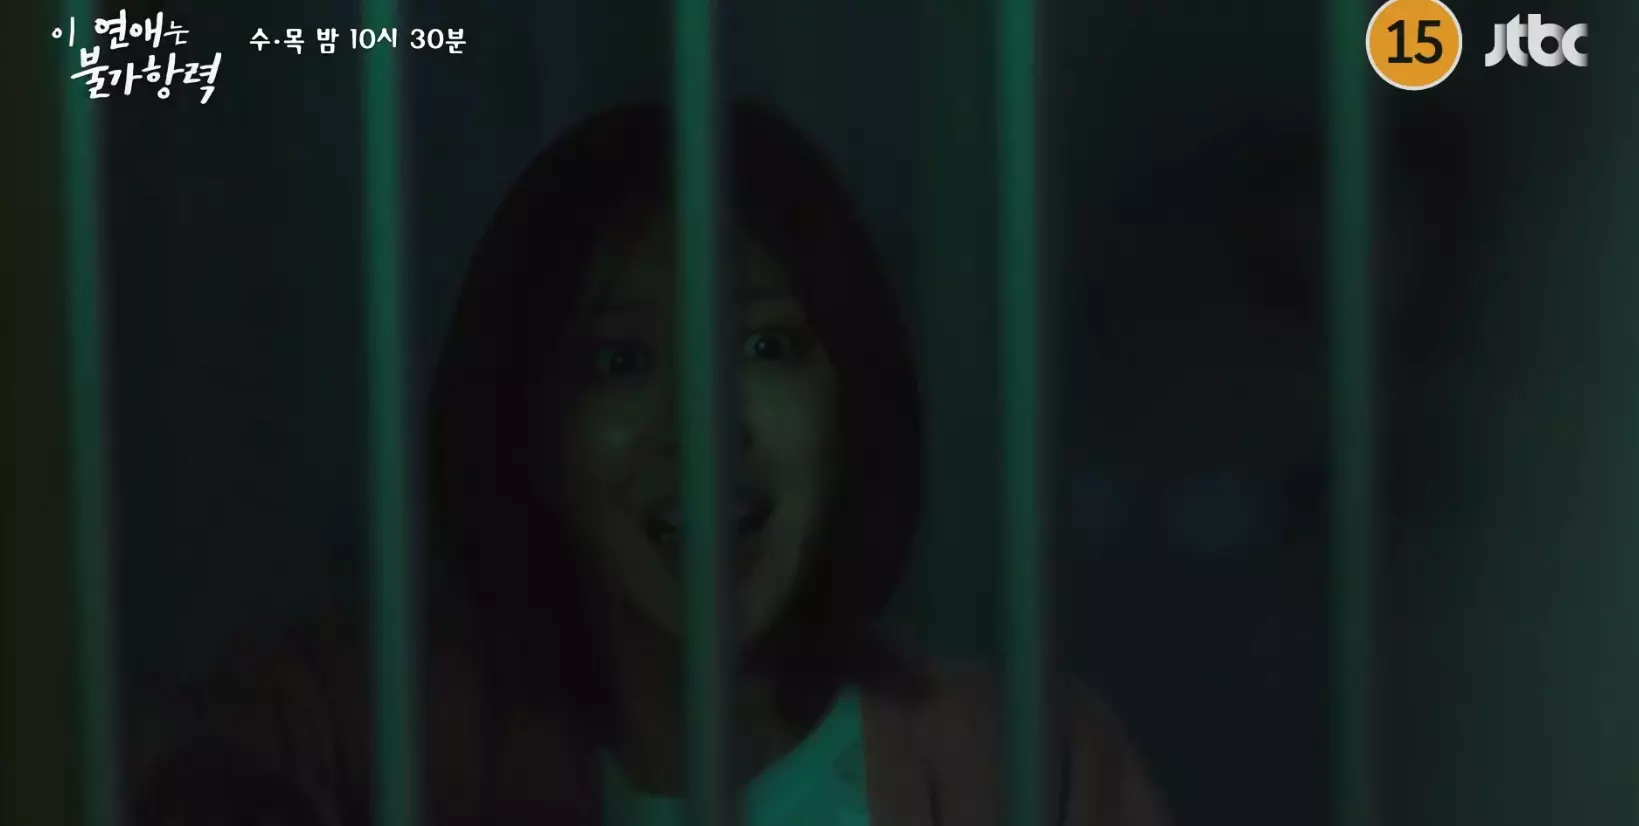 Hong-jo melihat boneka kutukan